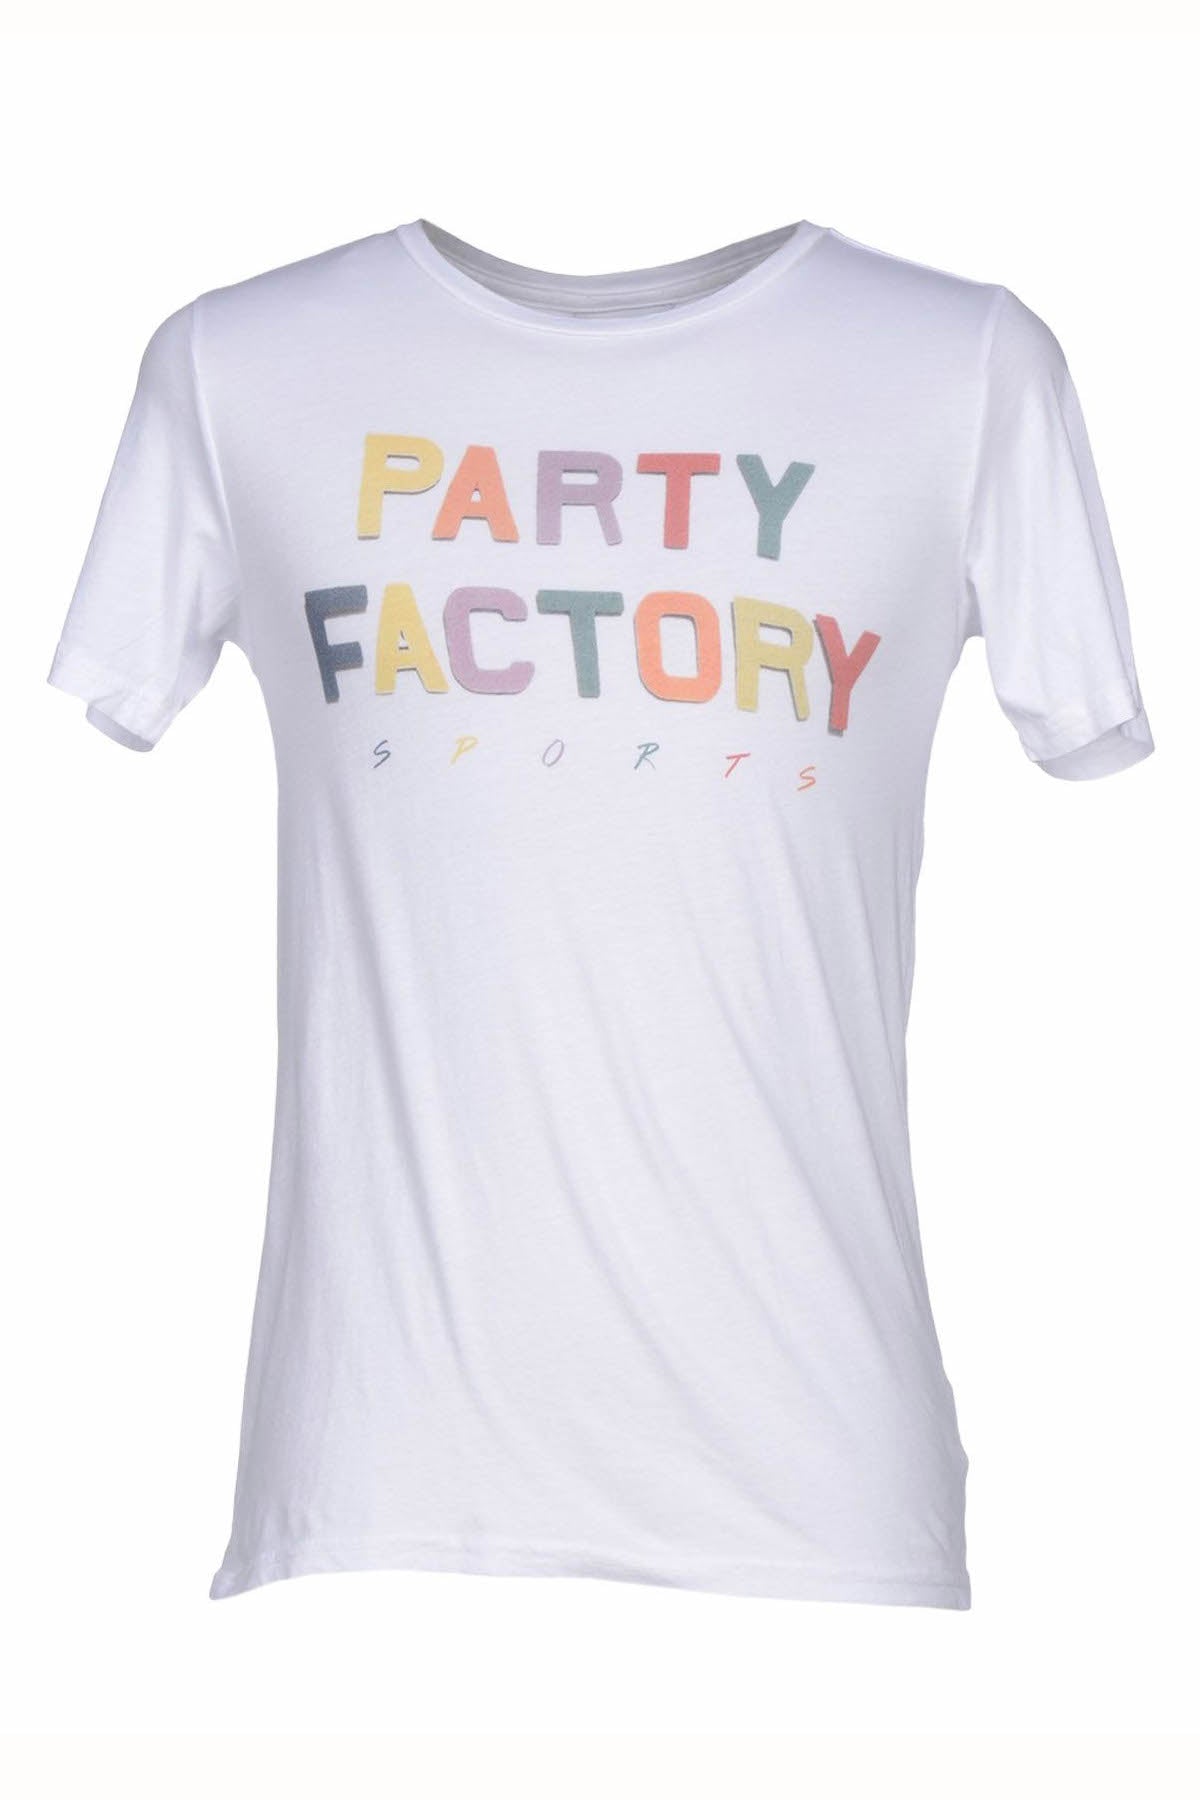 Rxmance Unisex White 'Party Factory' Tee